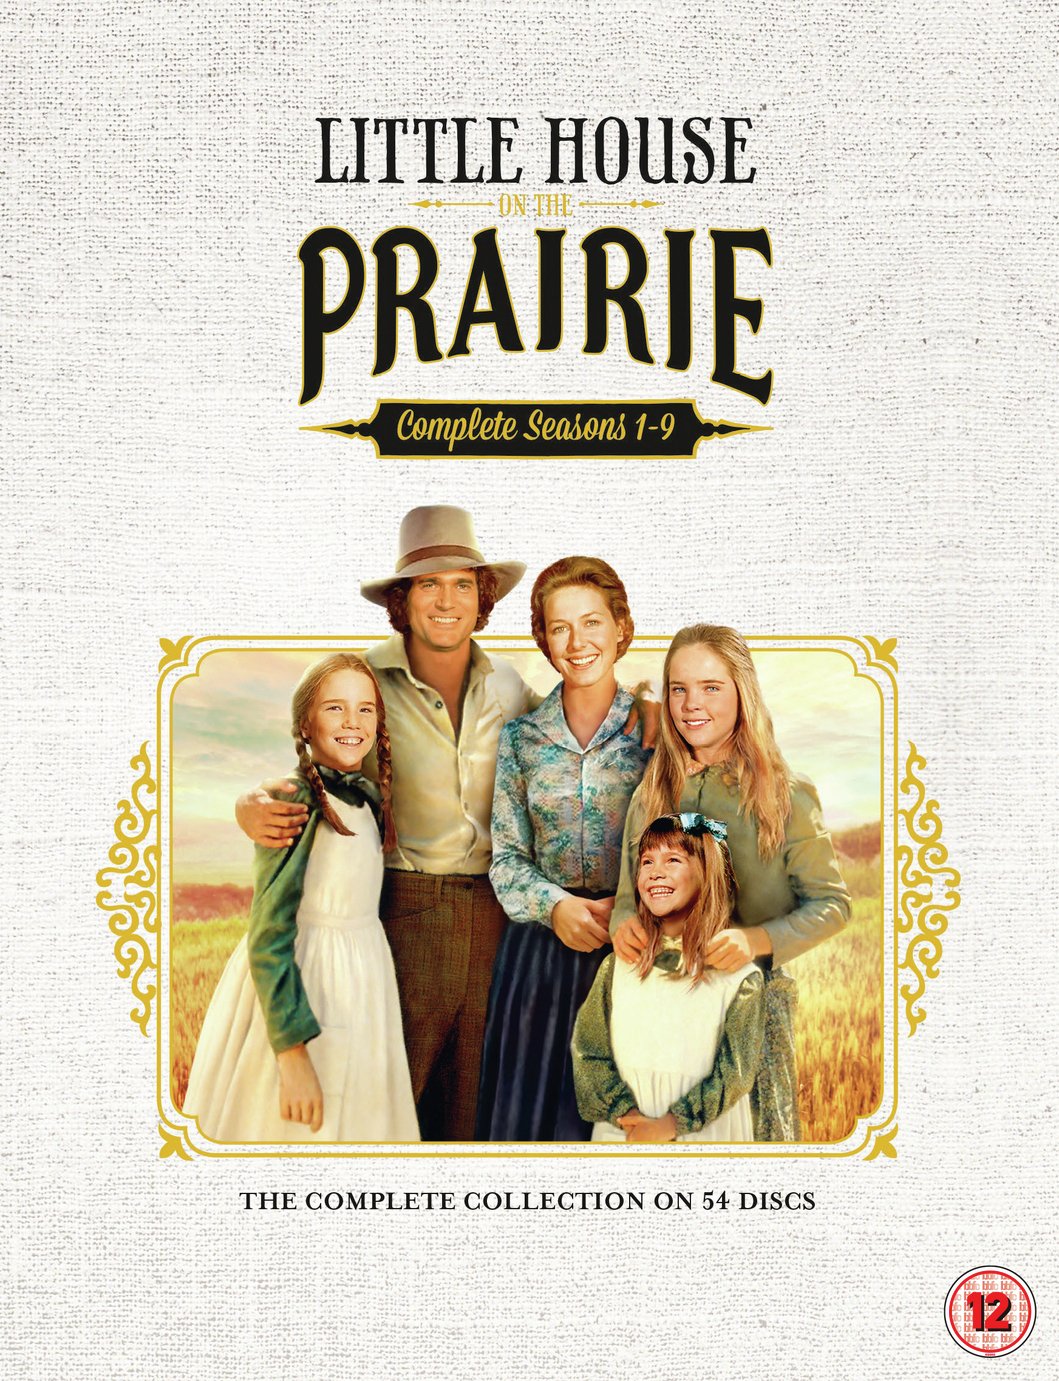 Little House on the Prairie DVD Box Set